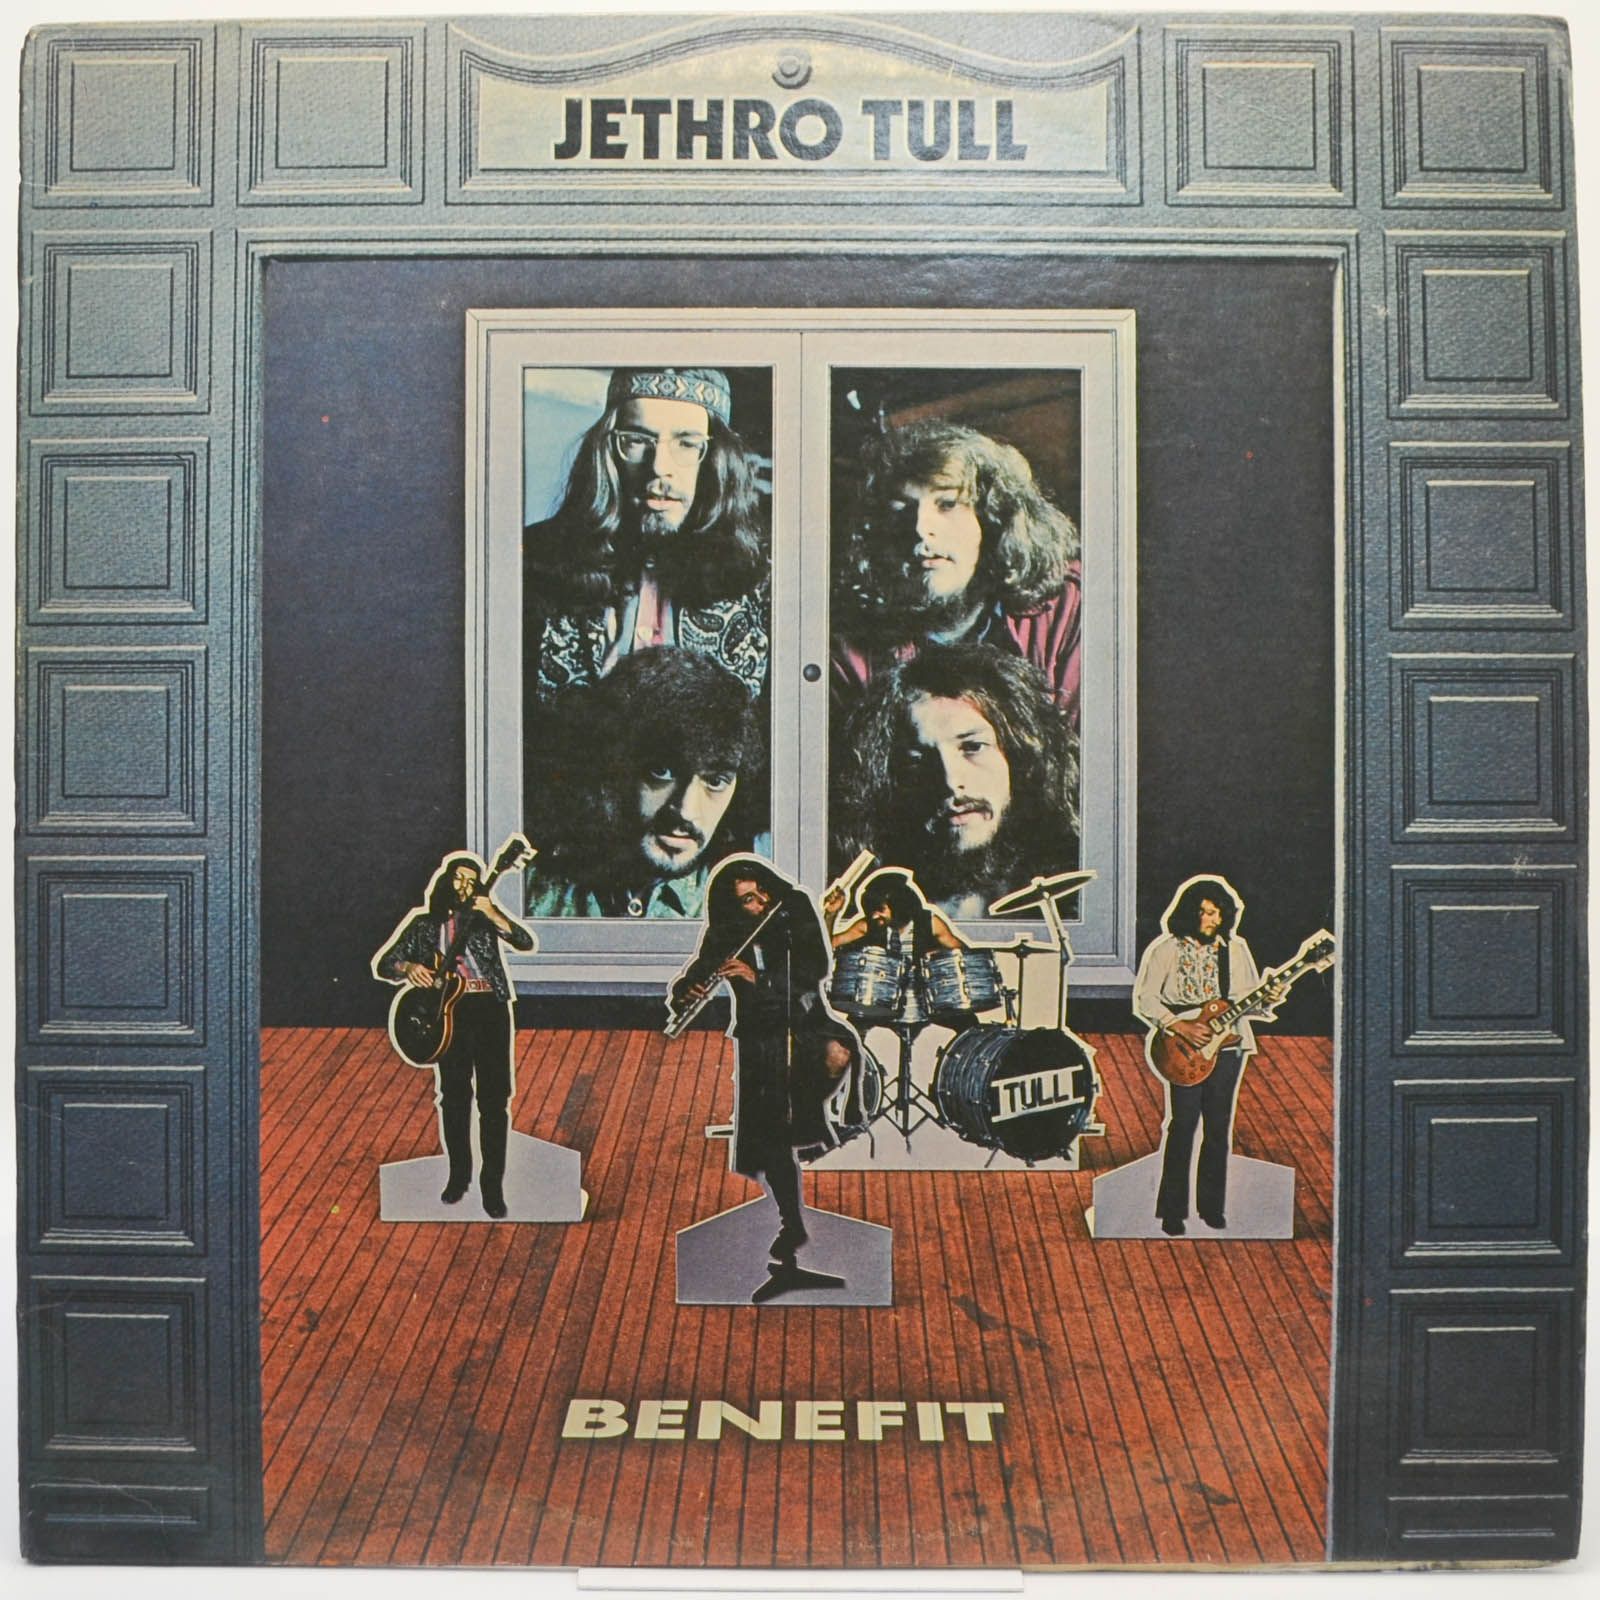 Jethro Tull — Benefit (USA), 1970